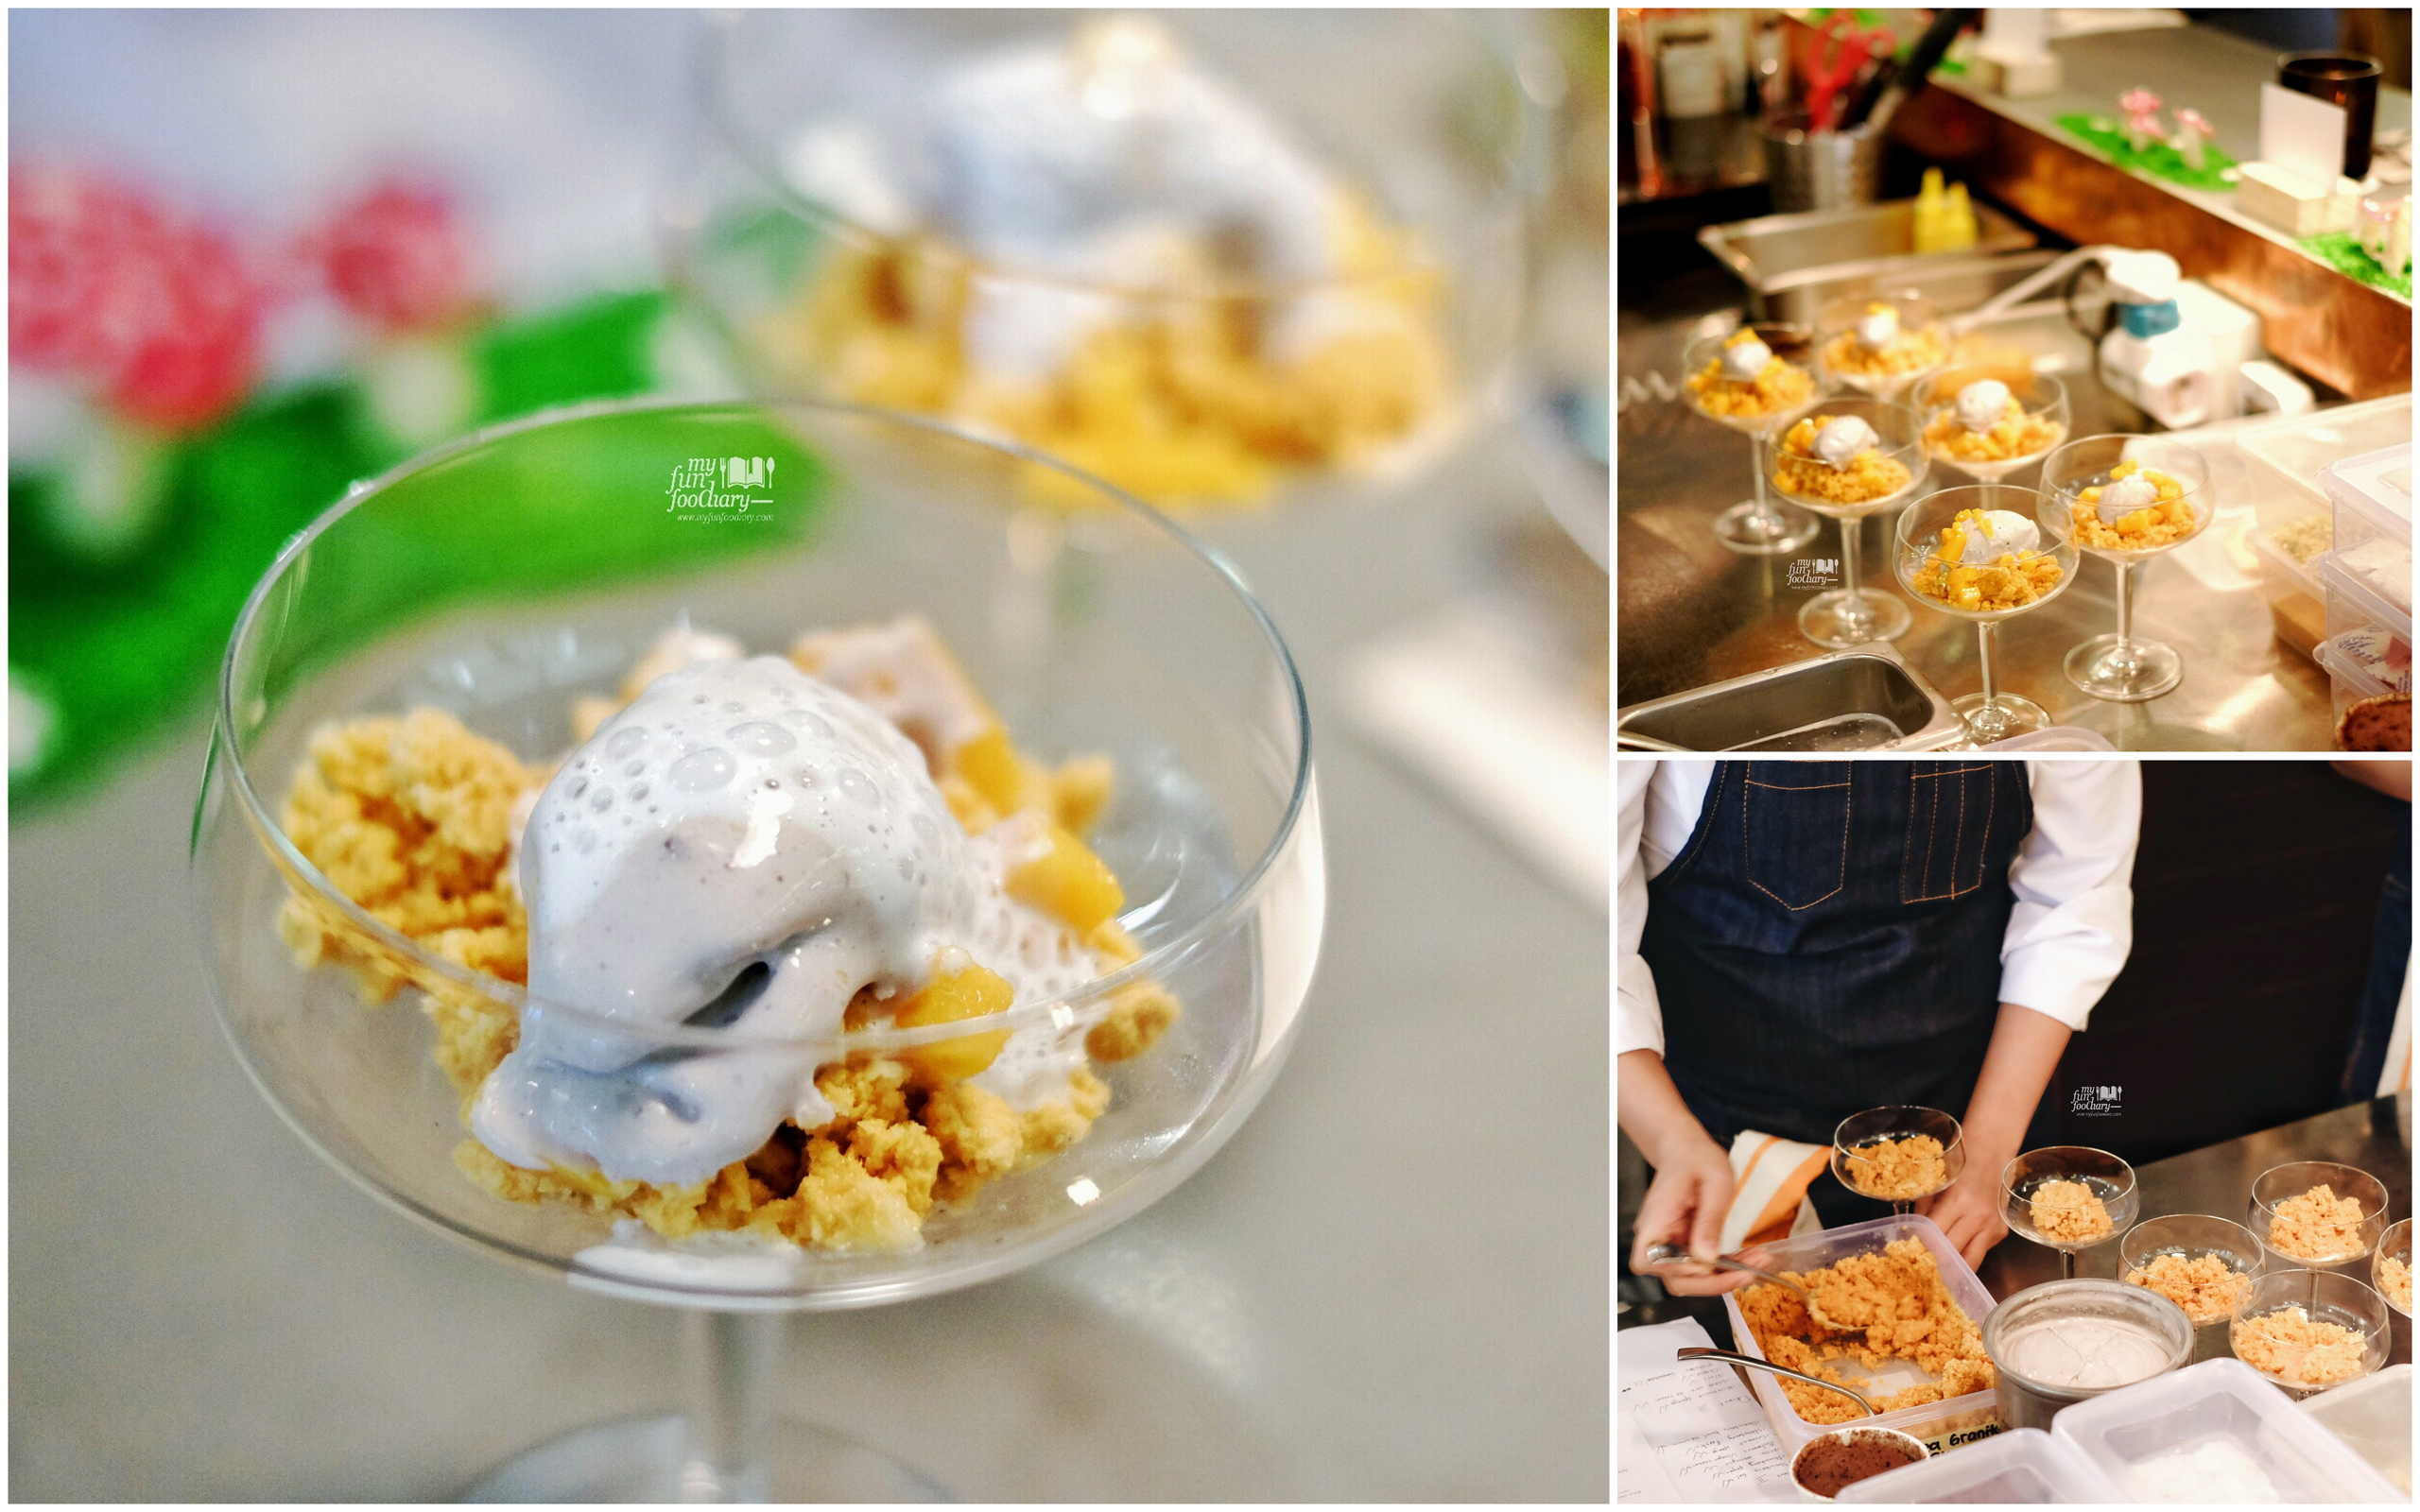 Thai Tea Mango Sticky Rice Ice Cream Dessert Omakase by Kim at Nomz - by Myfunfoodiary